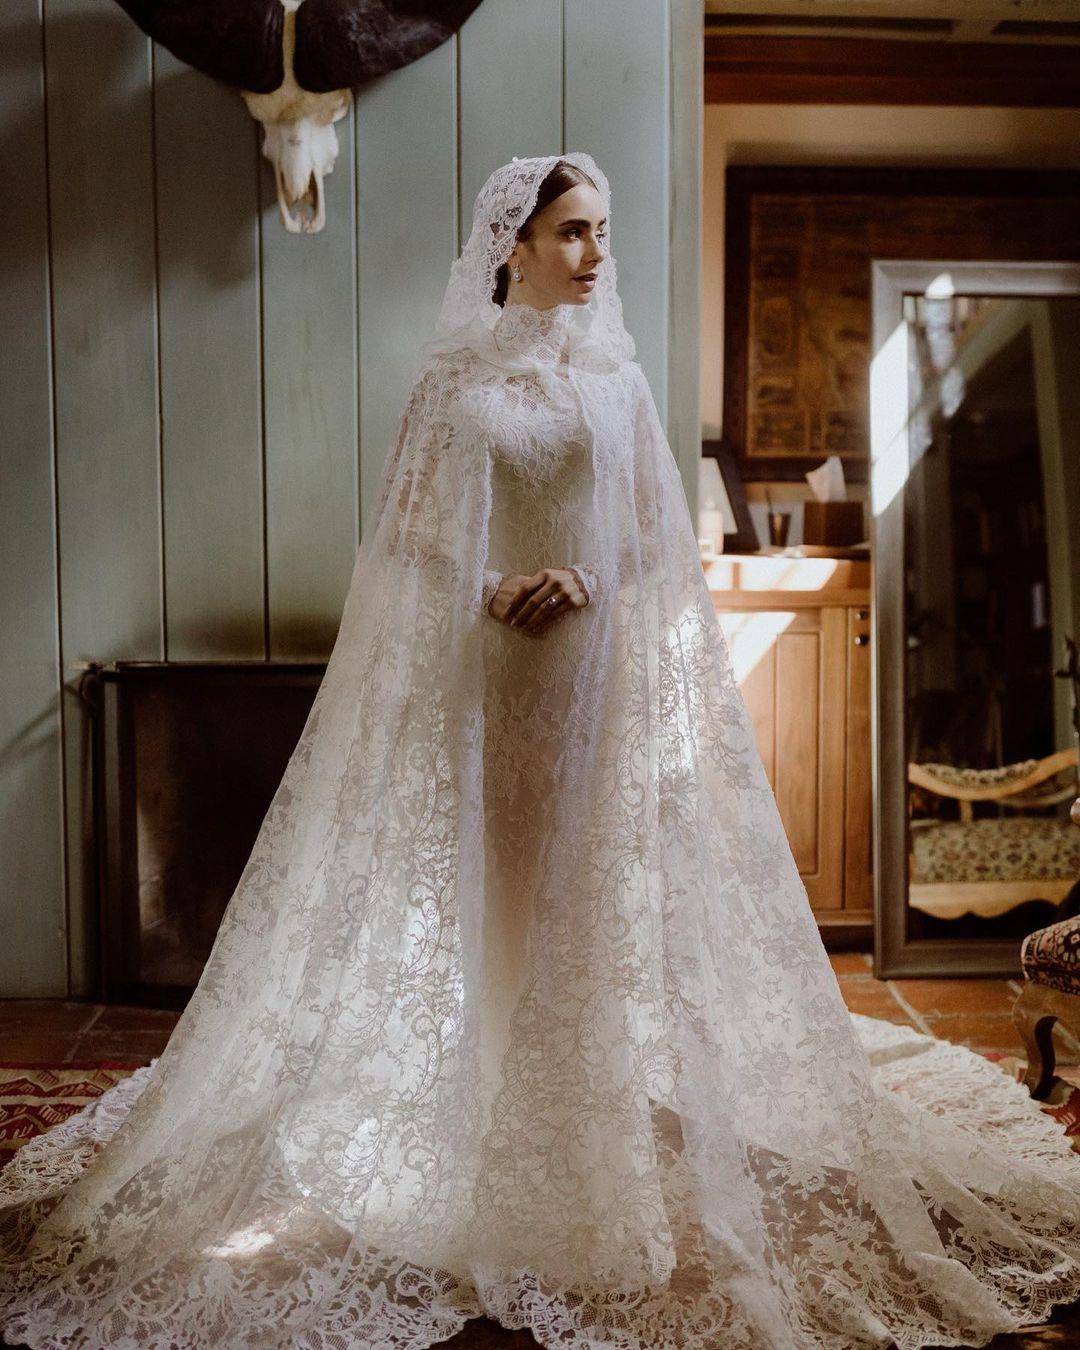 The Best Ralph Lauren Wedding Dresses: 6 Custom-Made Designs